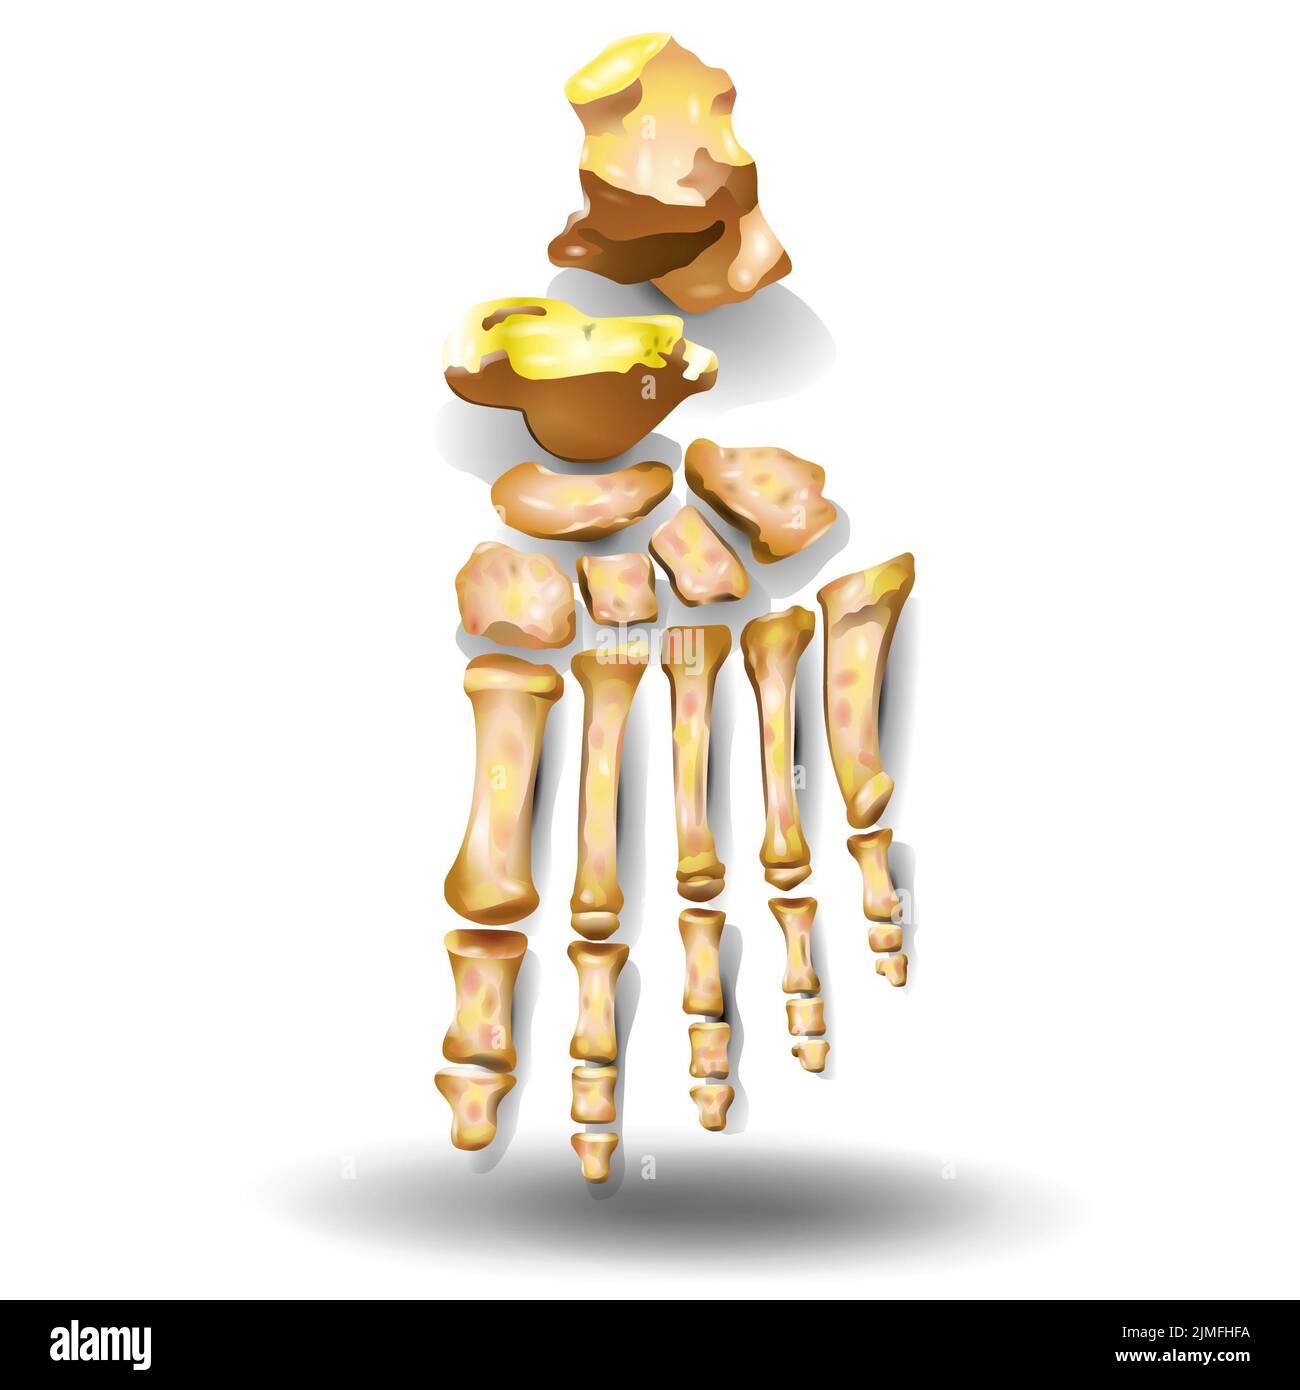 Anatomy of the Foot - Toe Skeleton on white background Stock Photo